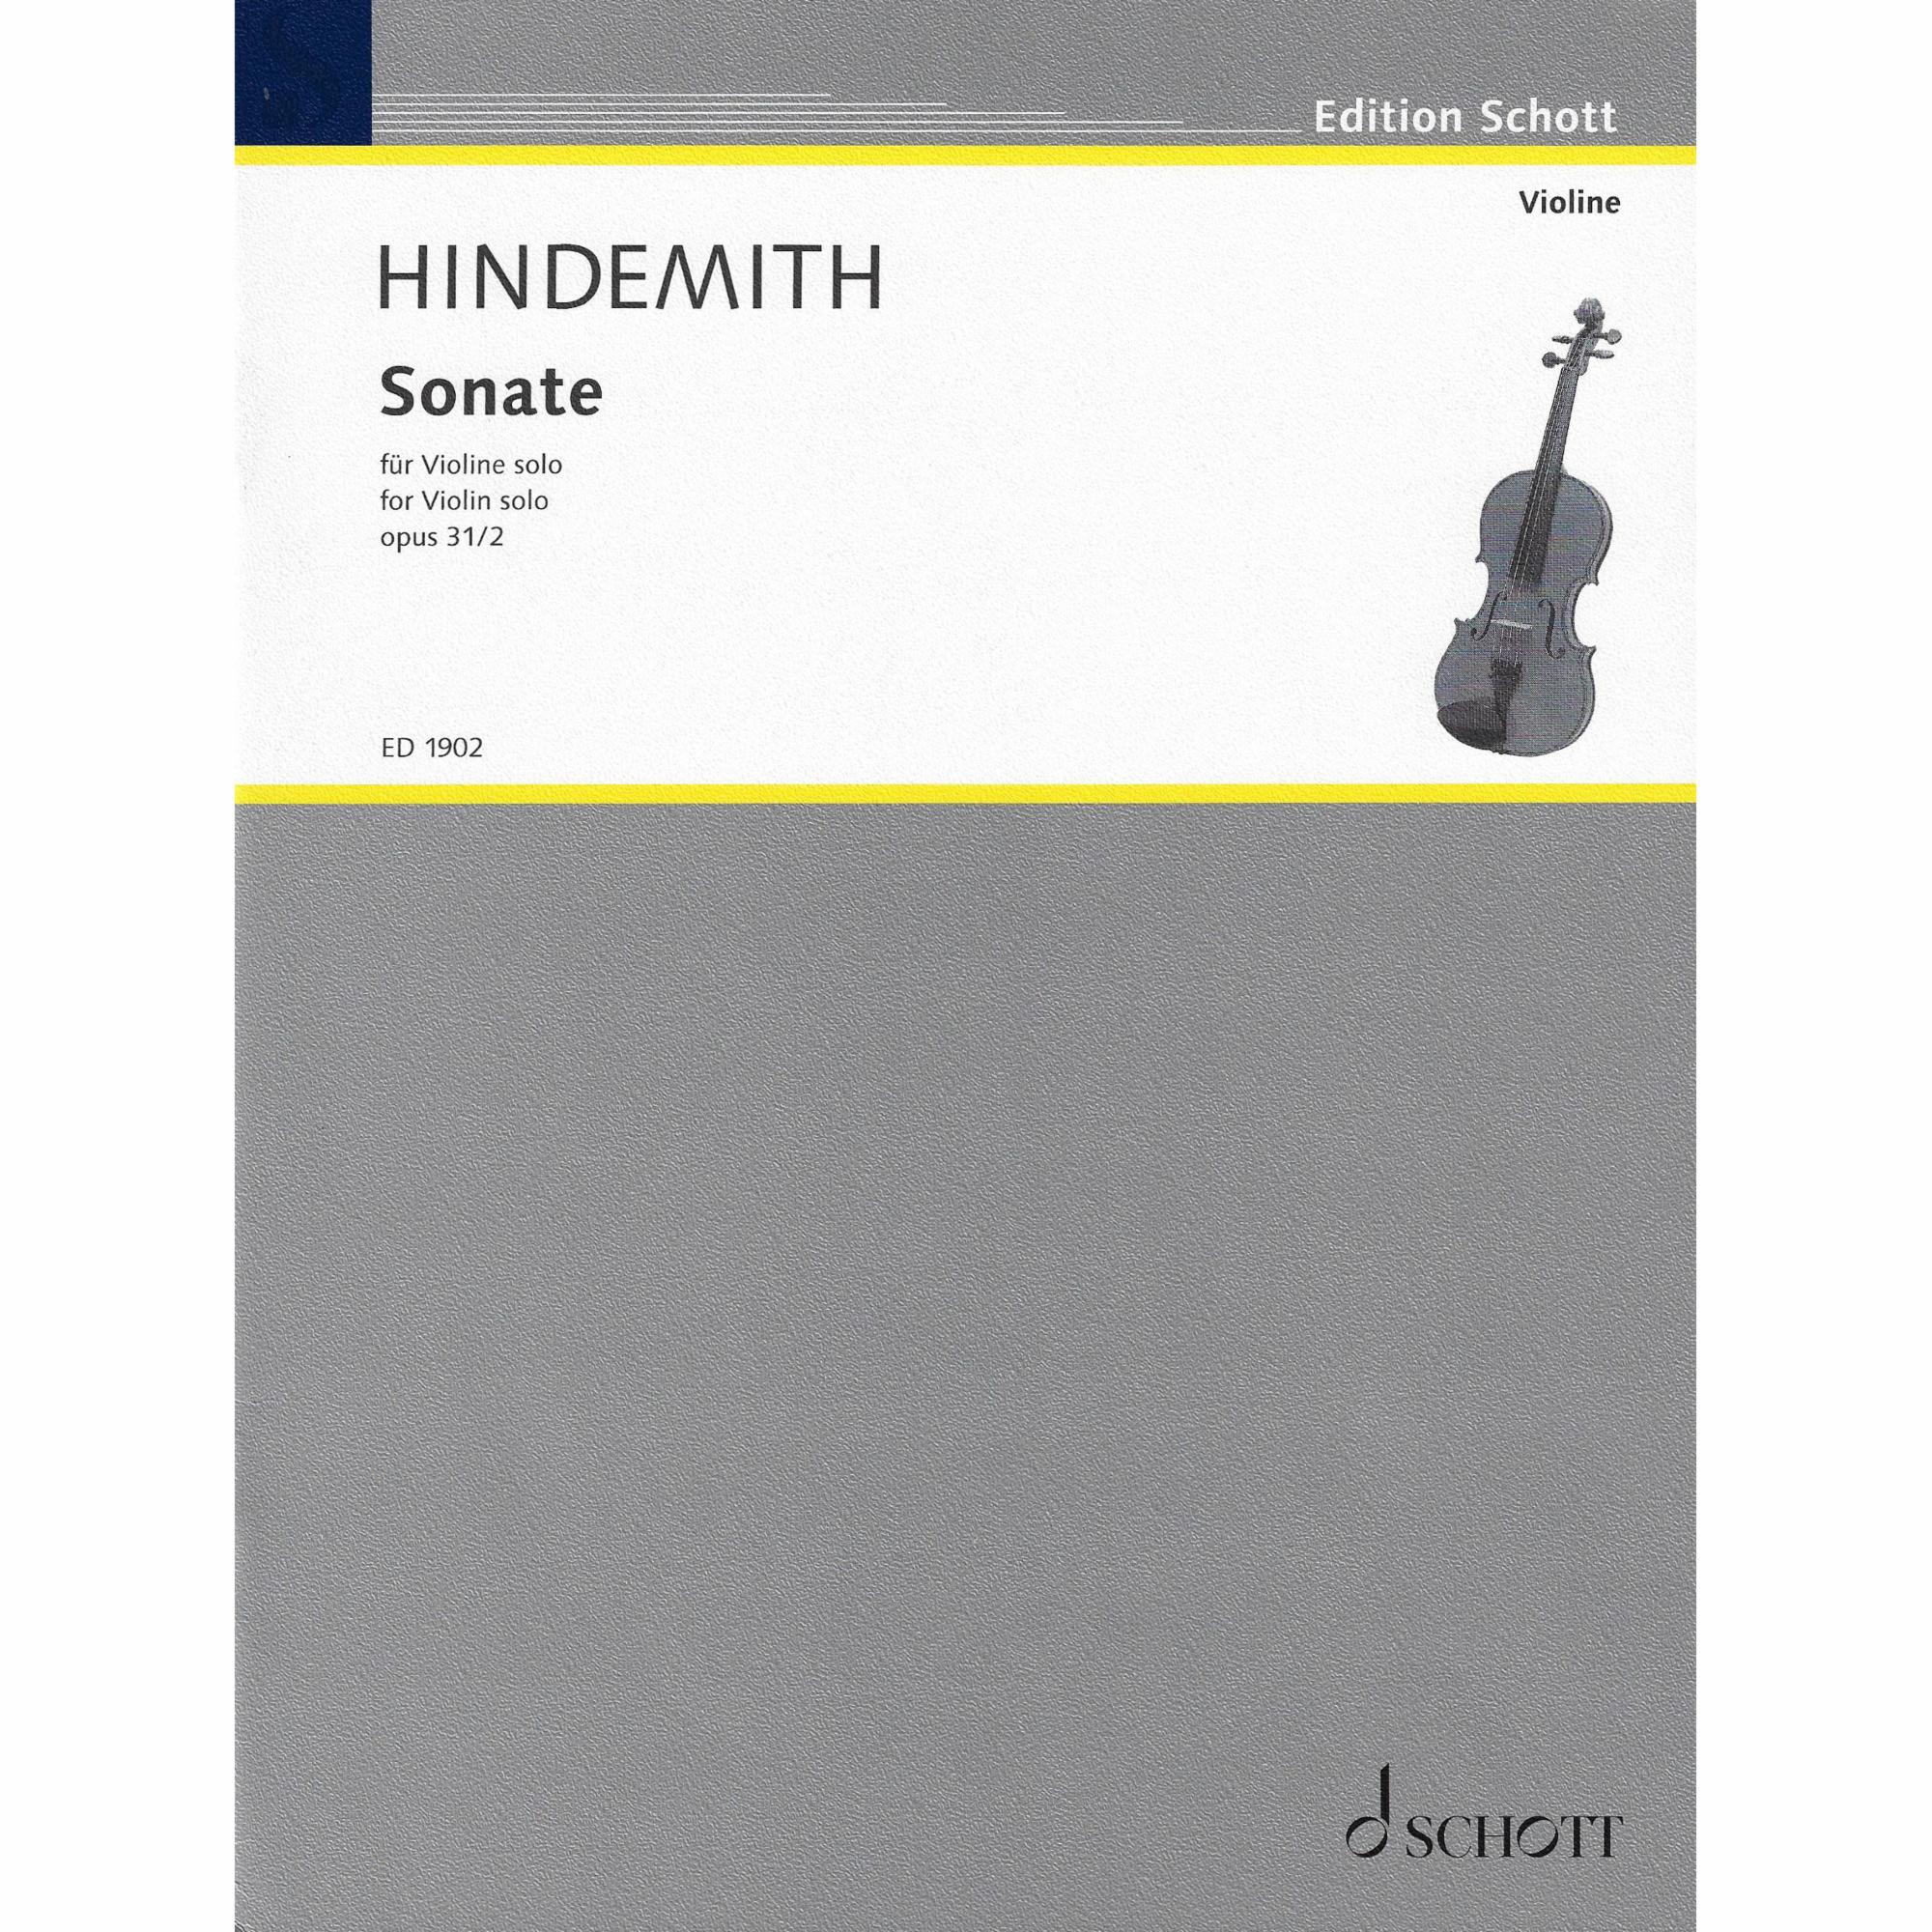 Hindemith -- Sonata, Op. 31/2 for Solo Violin